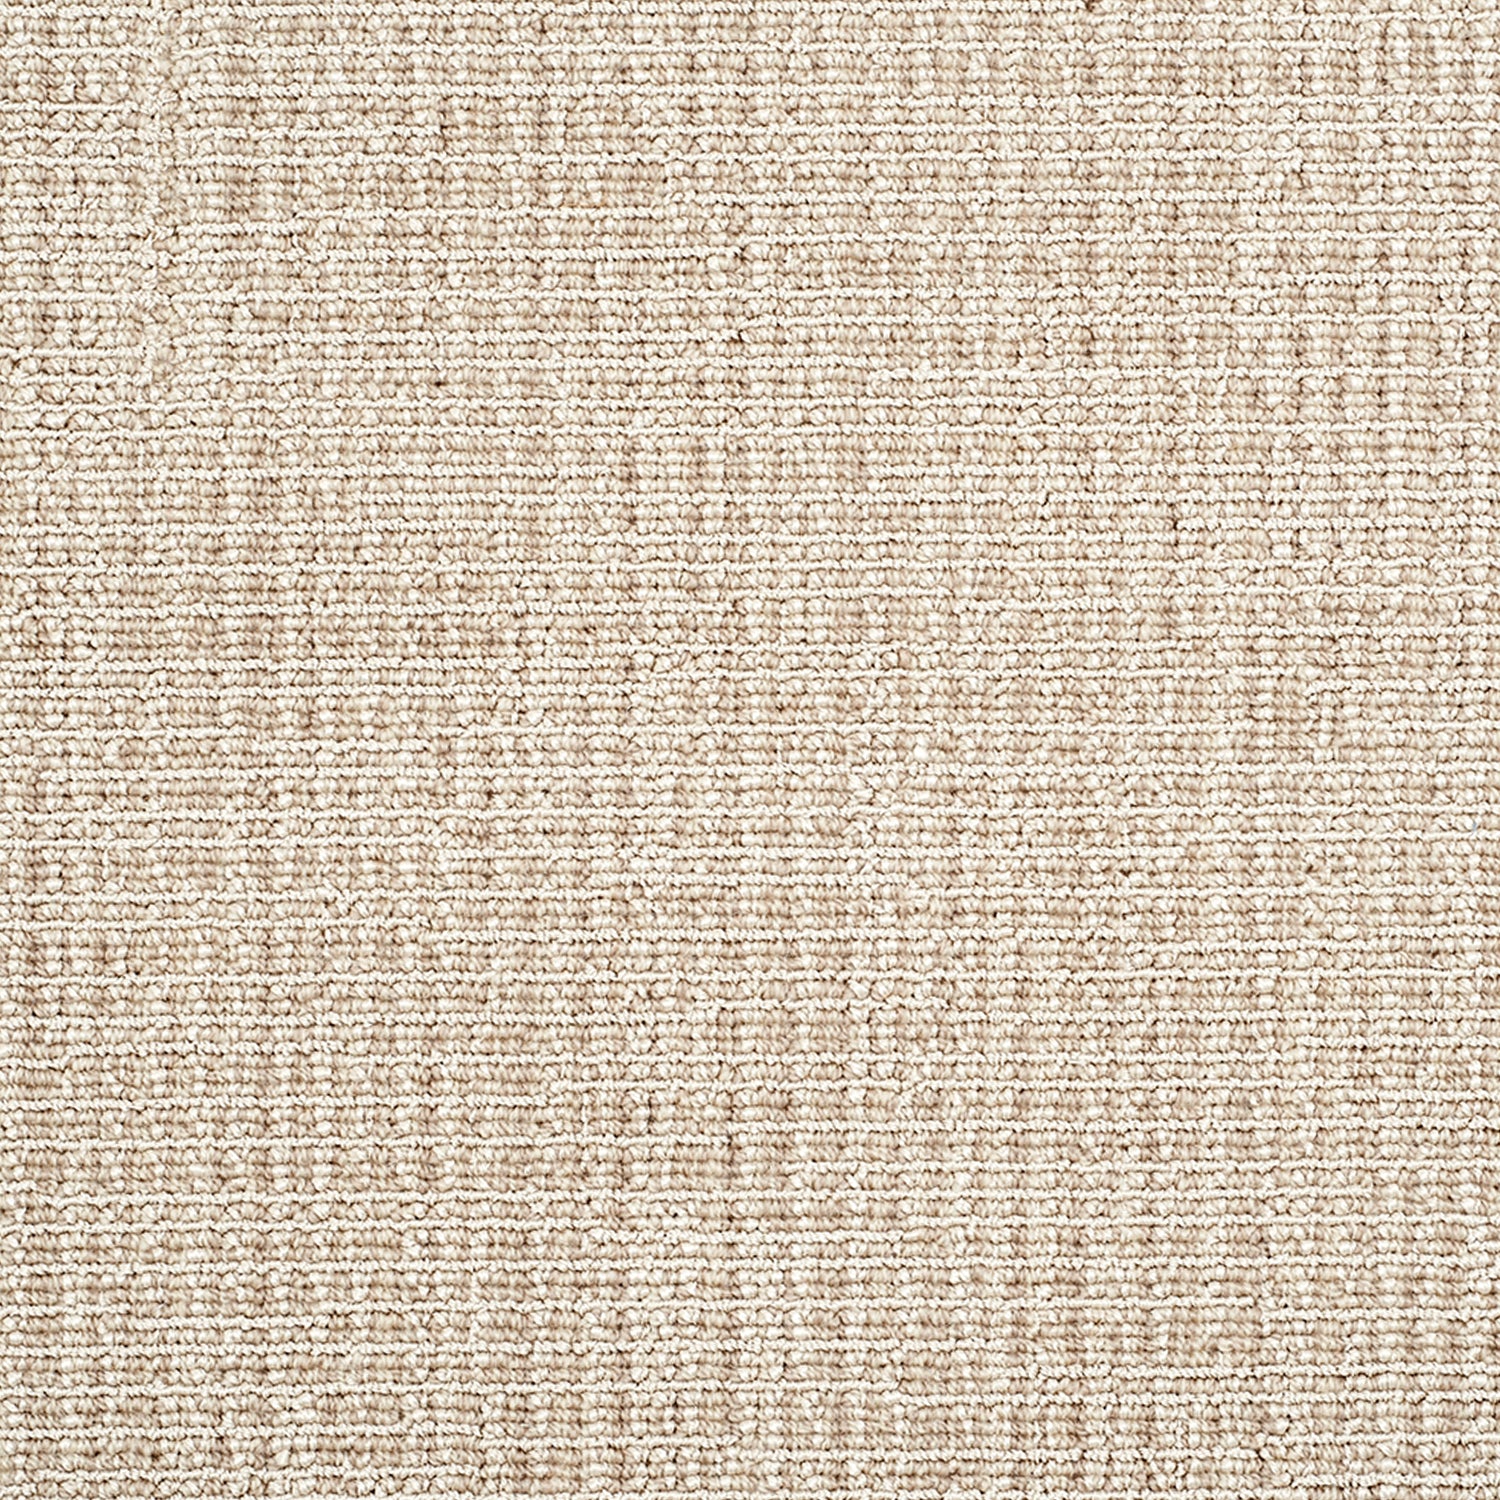 Wool-blend broadloom carpet swatch in a grid weave in mottled cream and tan.